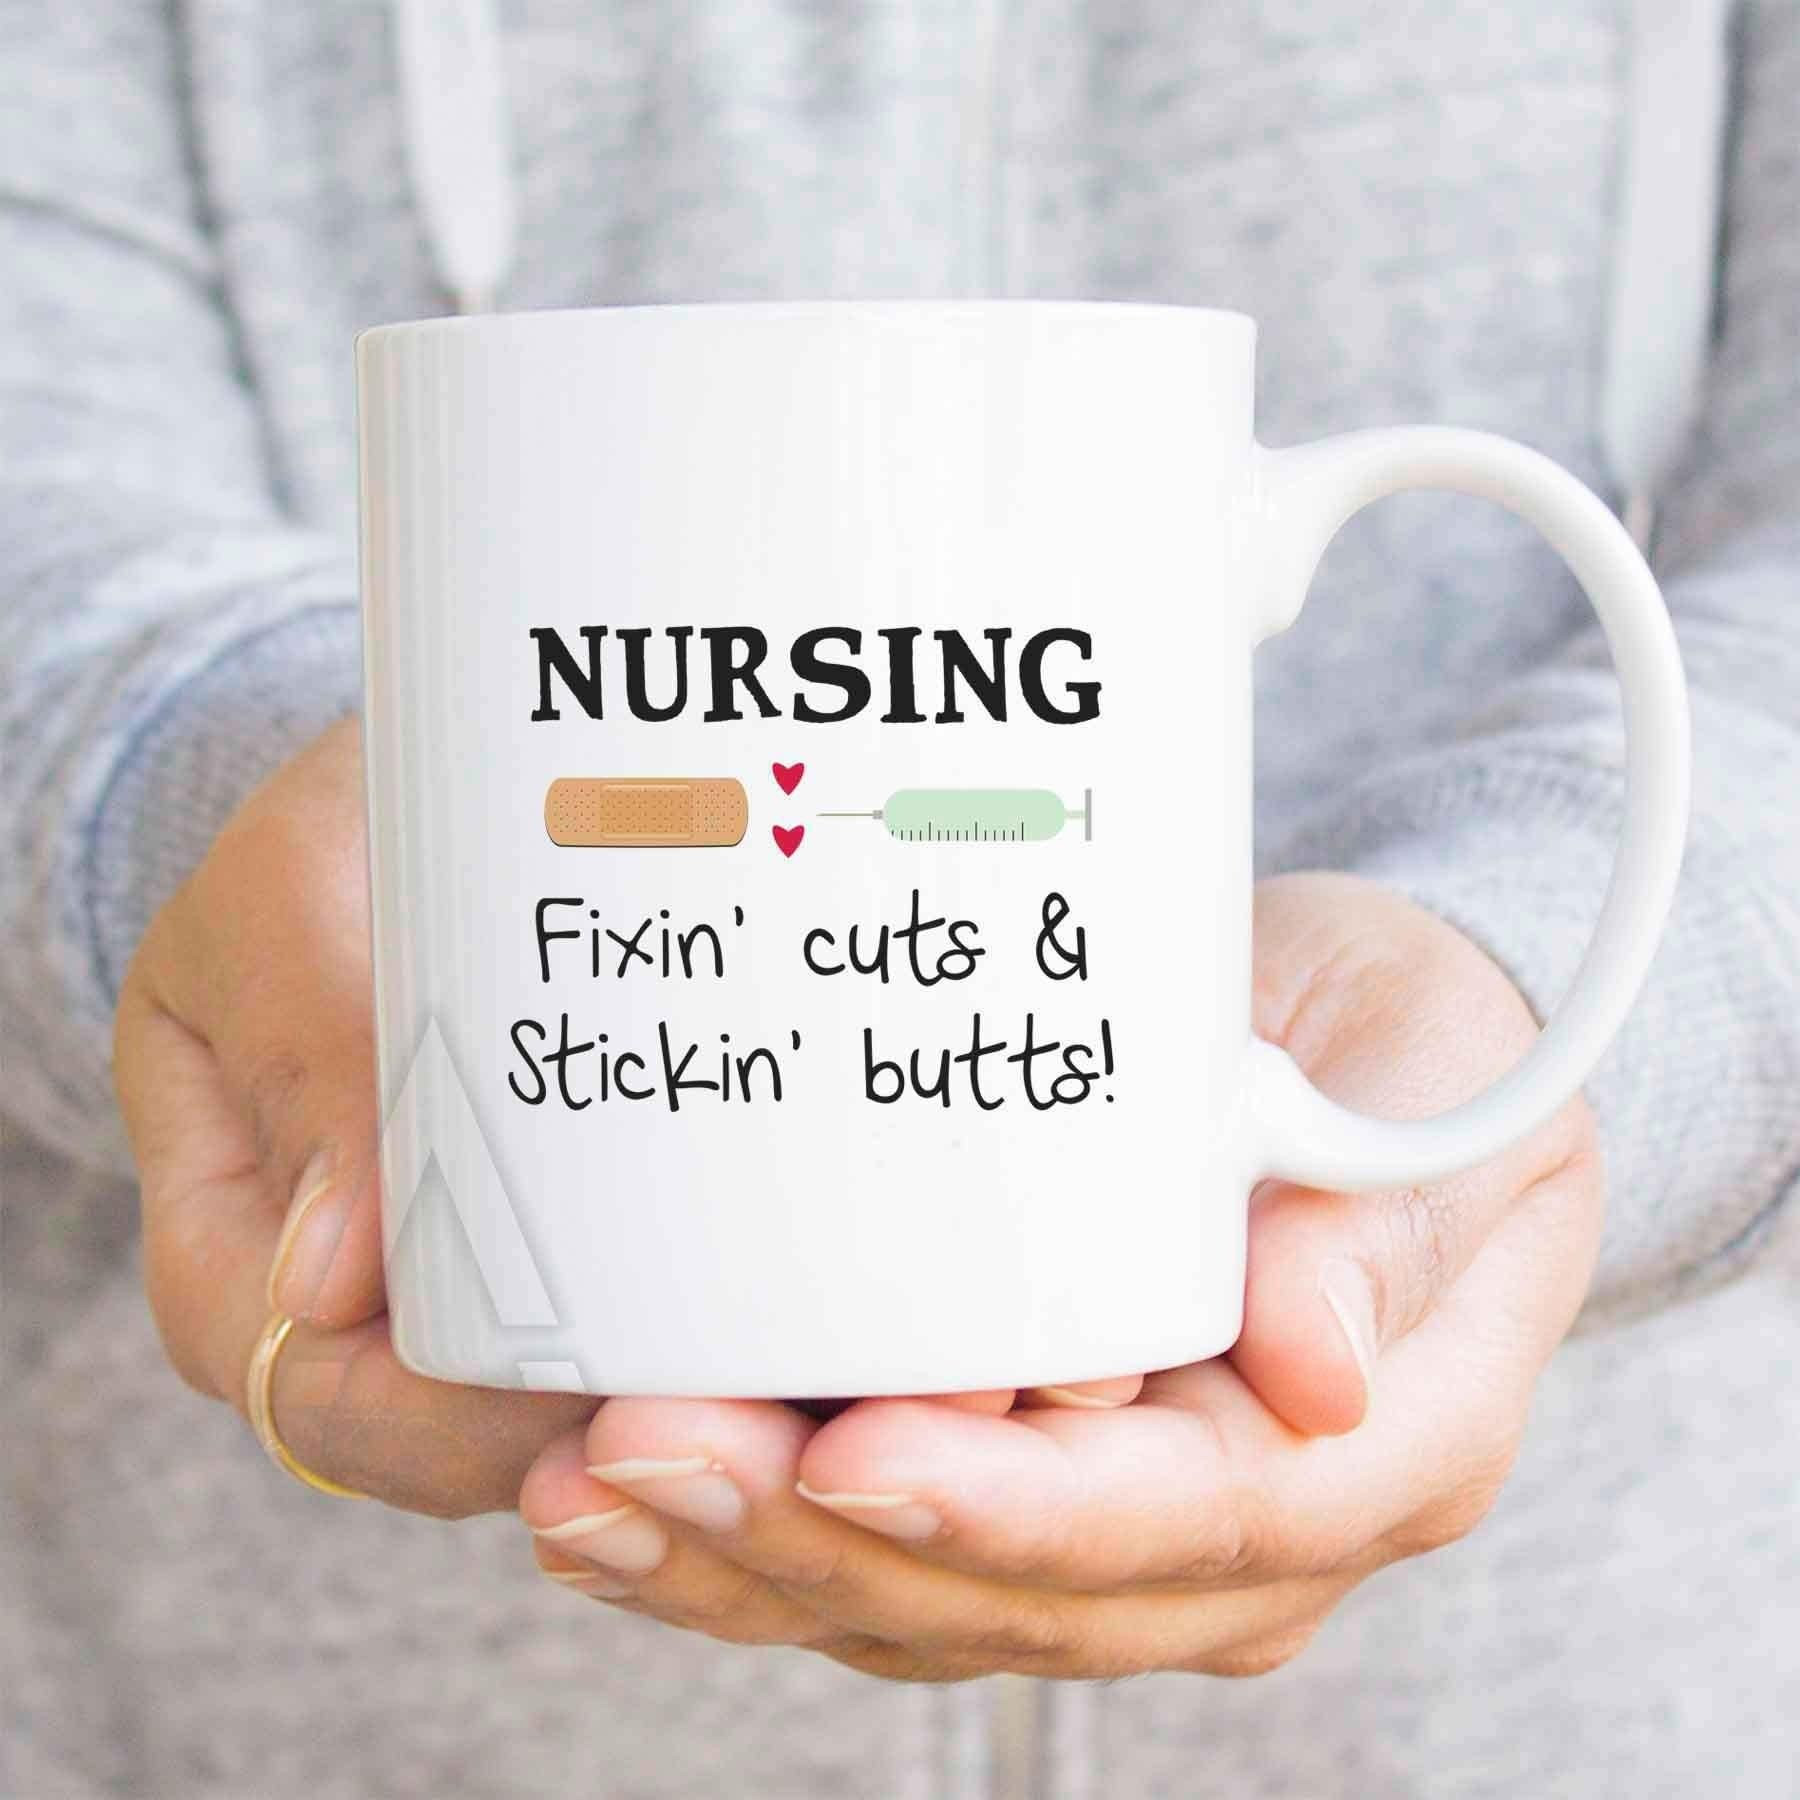 Gift Ideas For Nurses Graduation
 10 Unique Nursing School Graduation Gift Ideas 2019